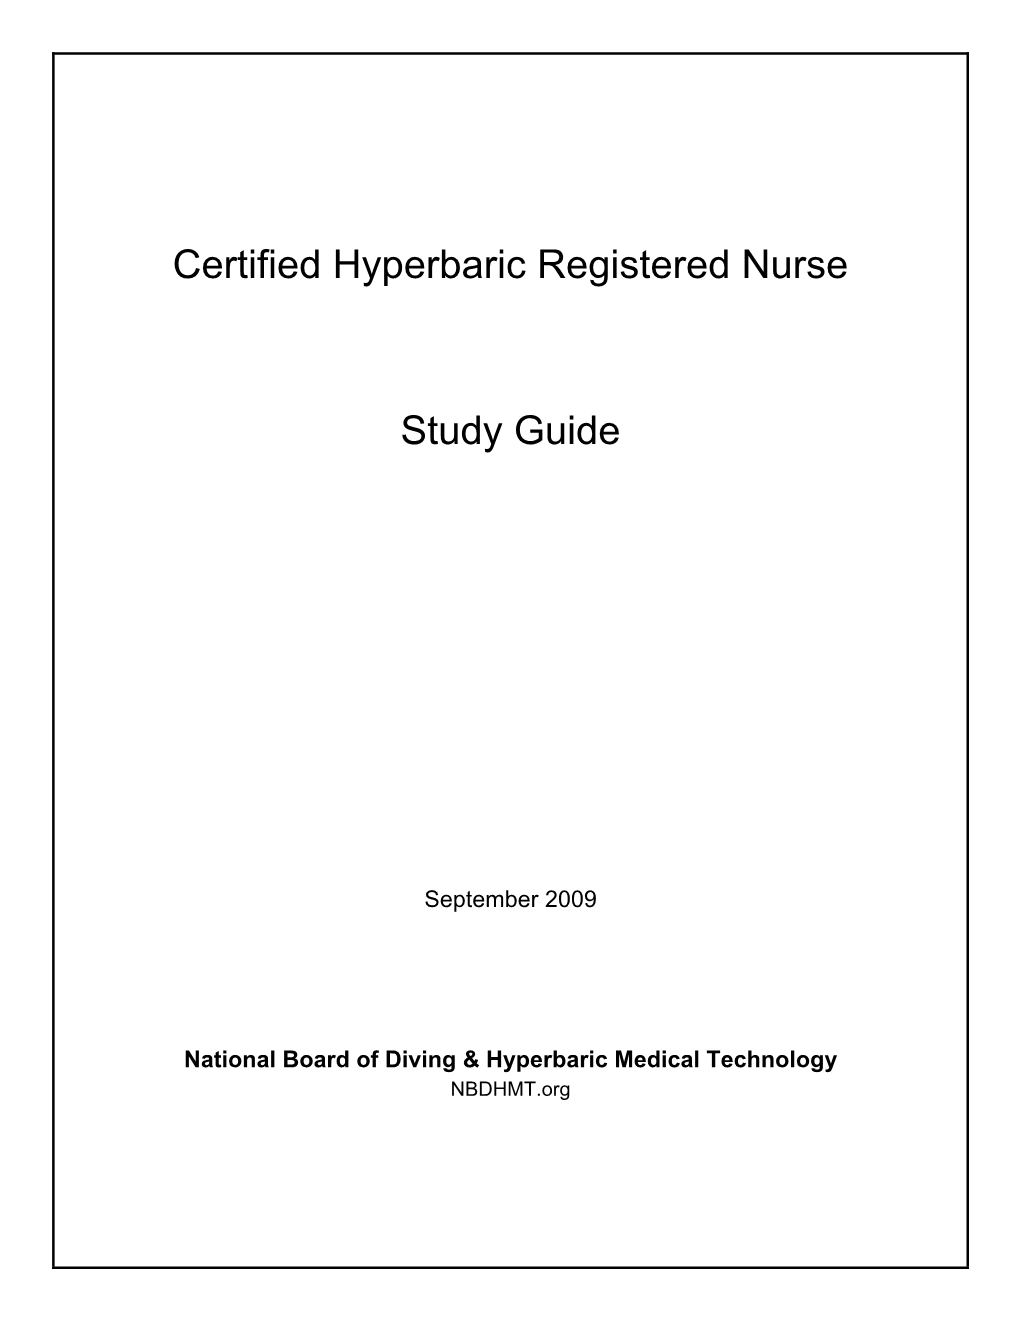 Certified Hyperbaric Registered Nurse Study Guide